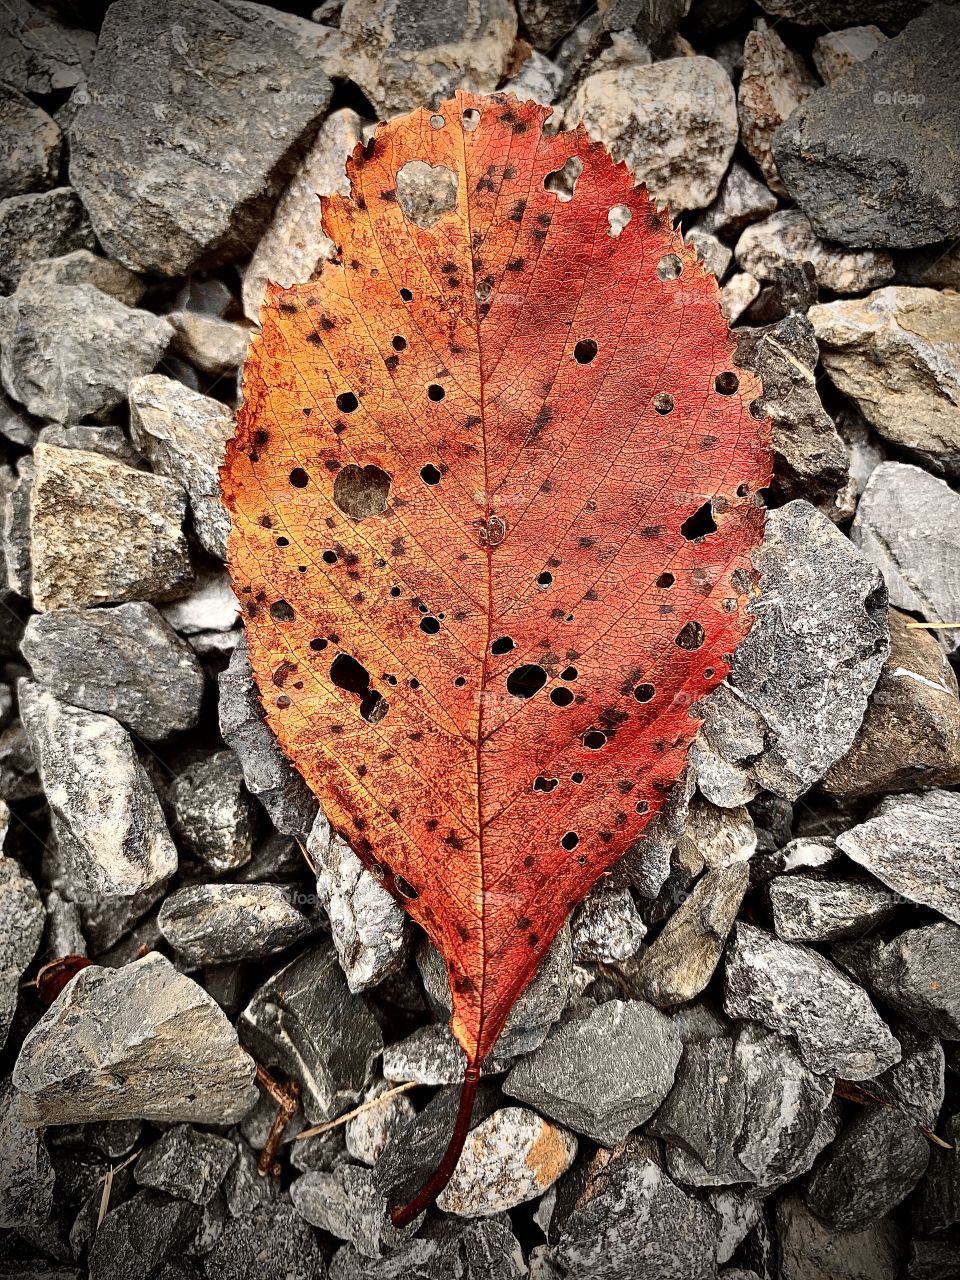 Red leaf on a rocky path